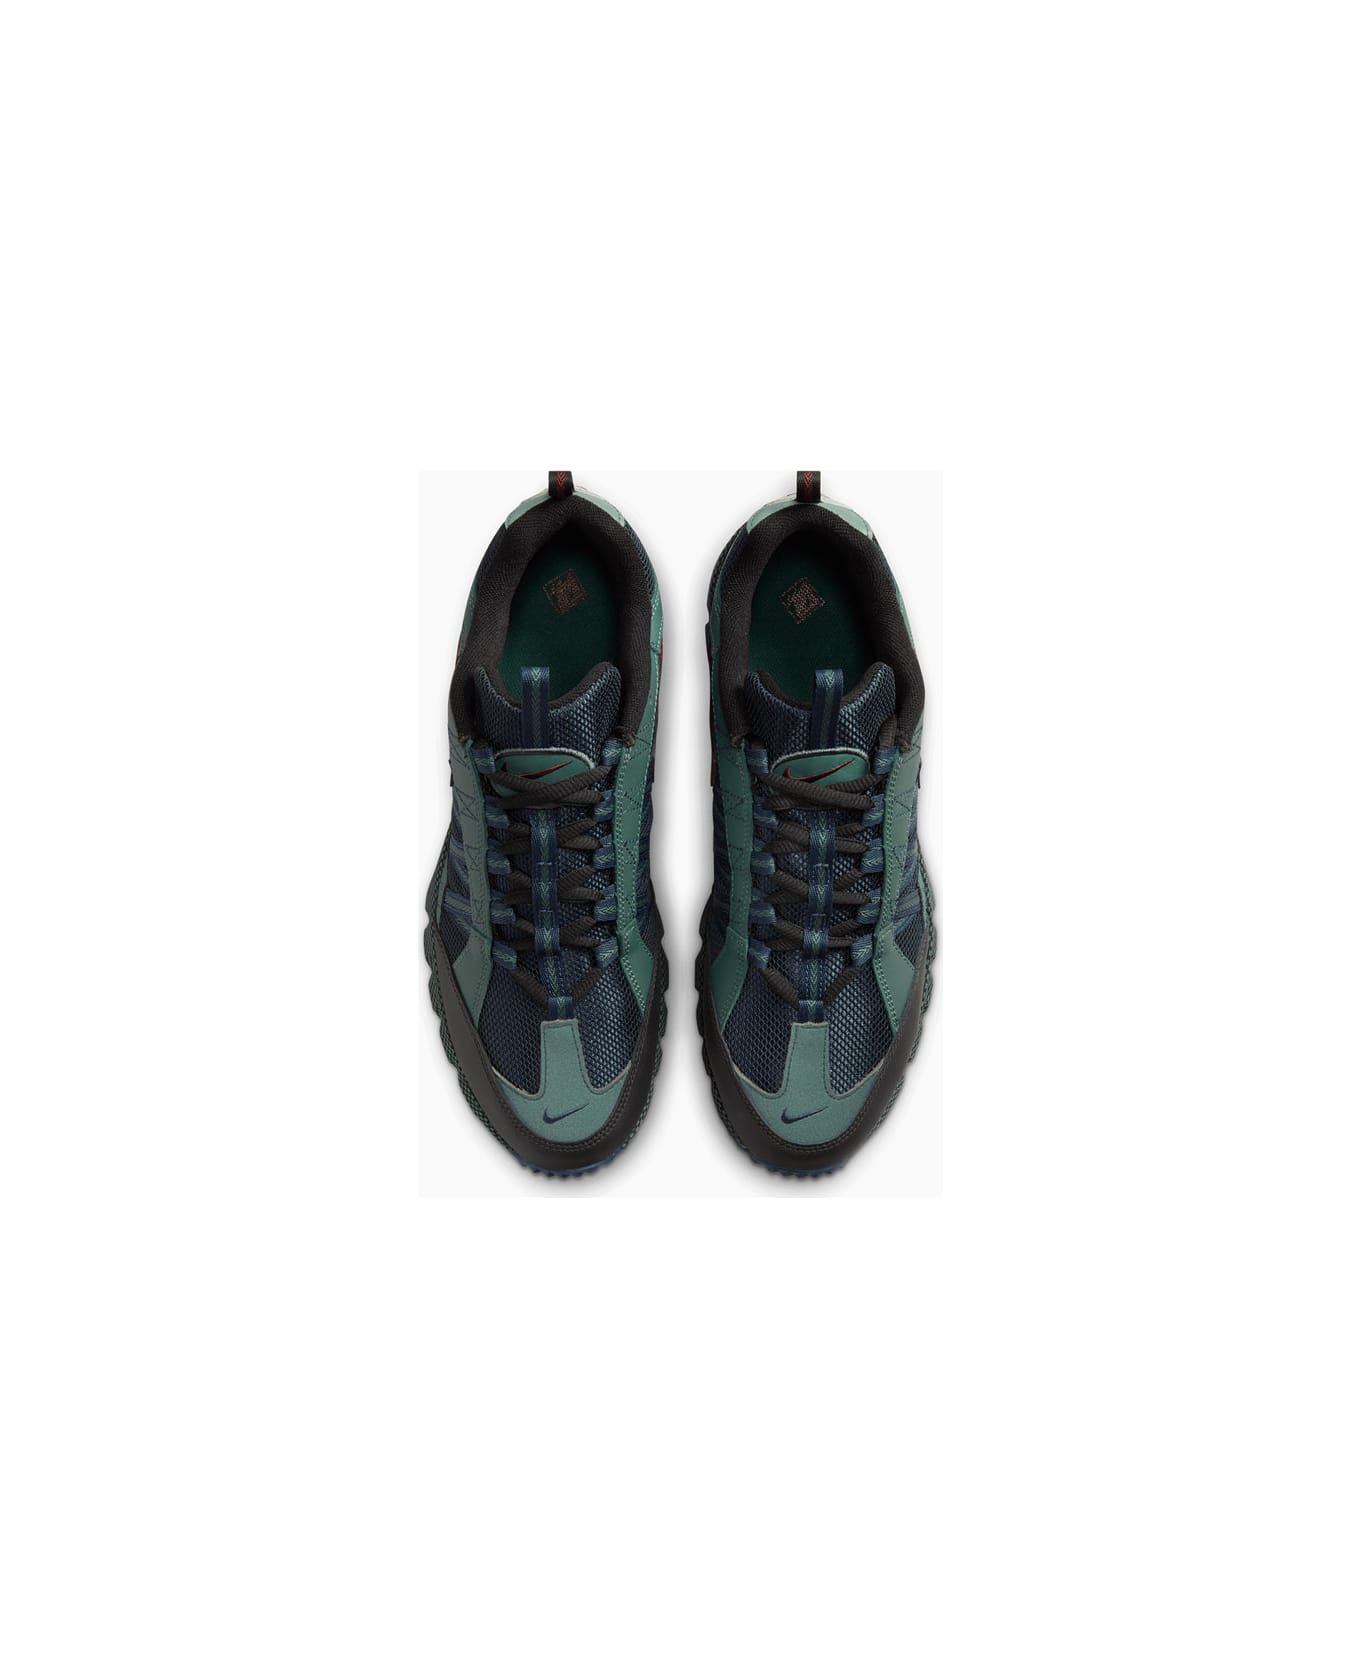 Nike Air Humara Qs Sneakers Fj7098-001 - Multiple colors